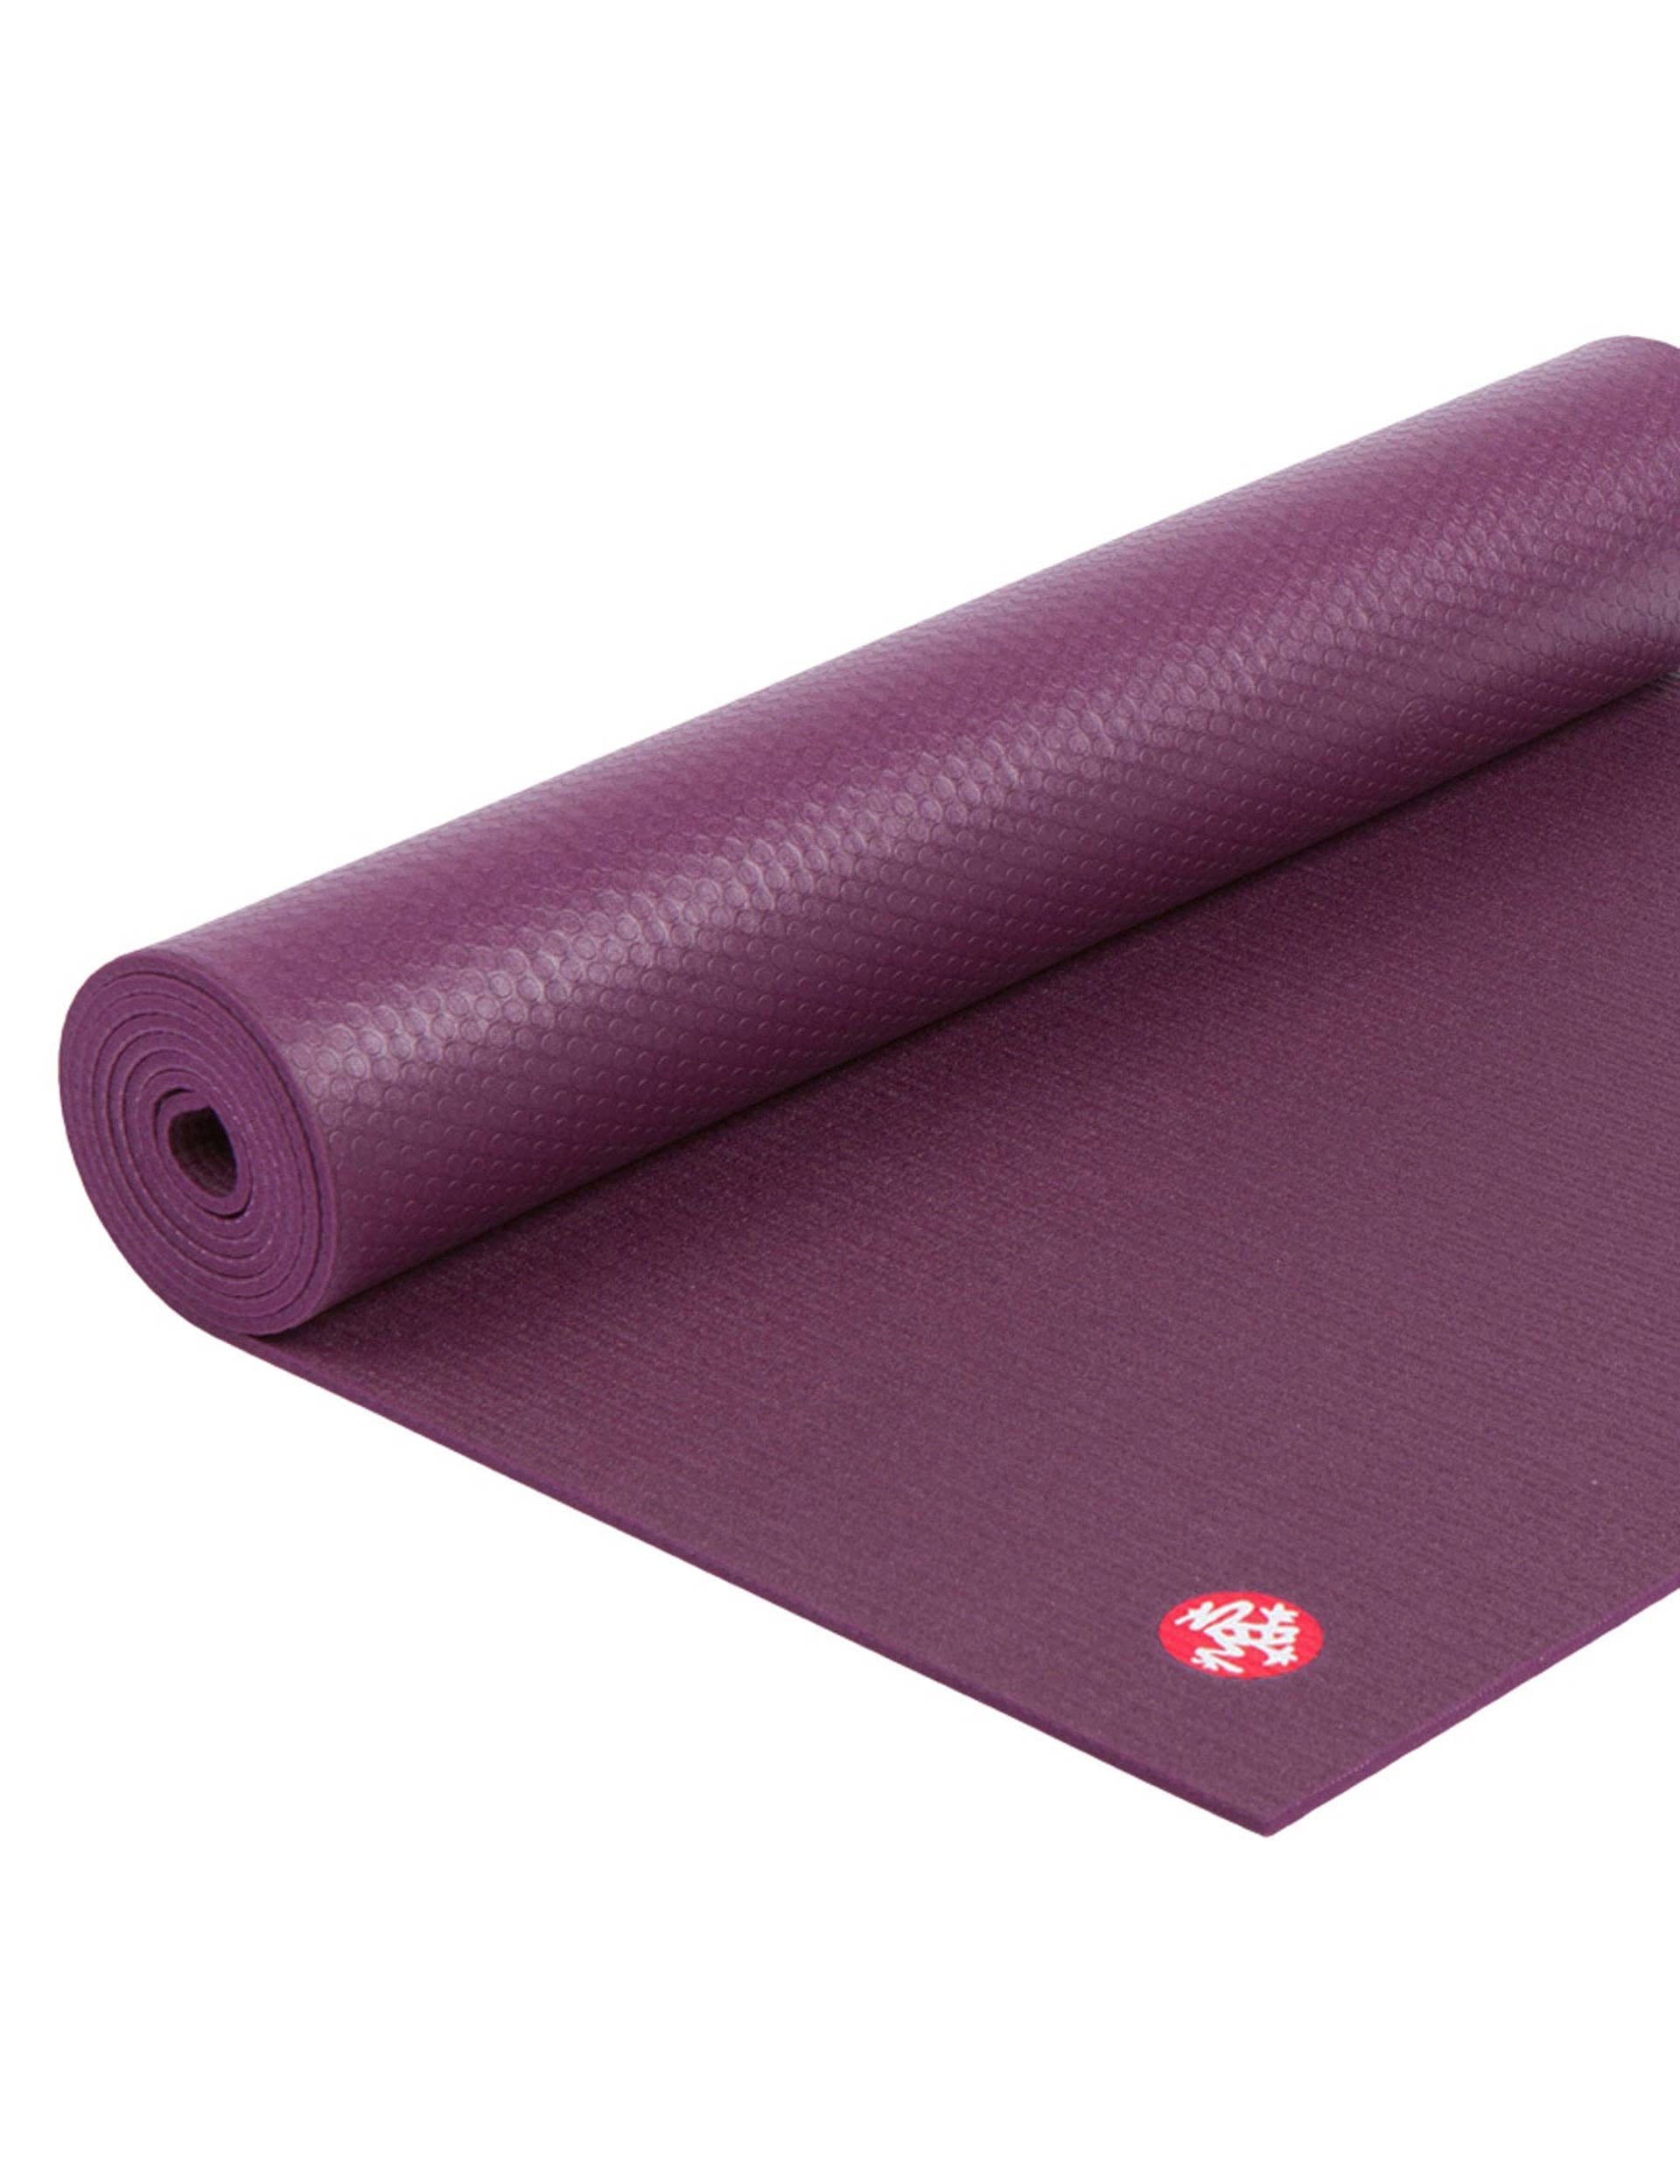 Manduka Prolite Yoga and Pilates Mat : : Sports, Fitness & Outdoors